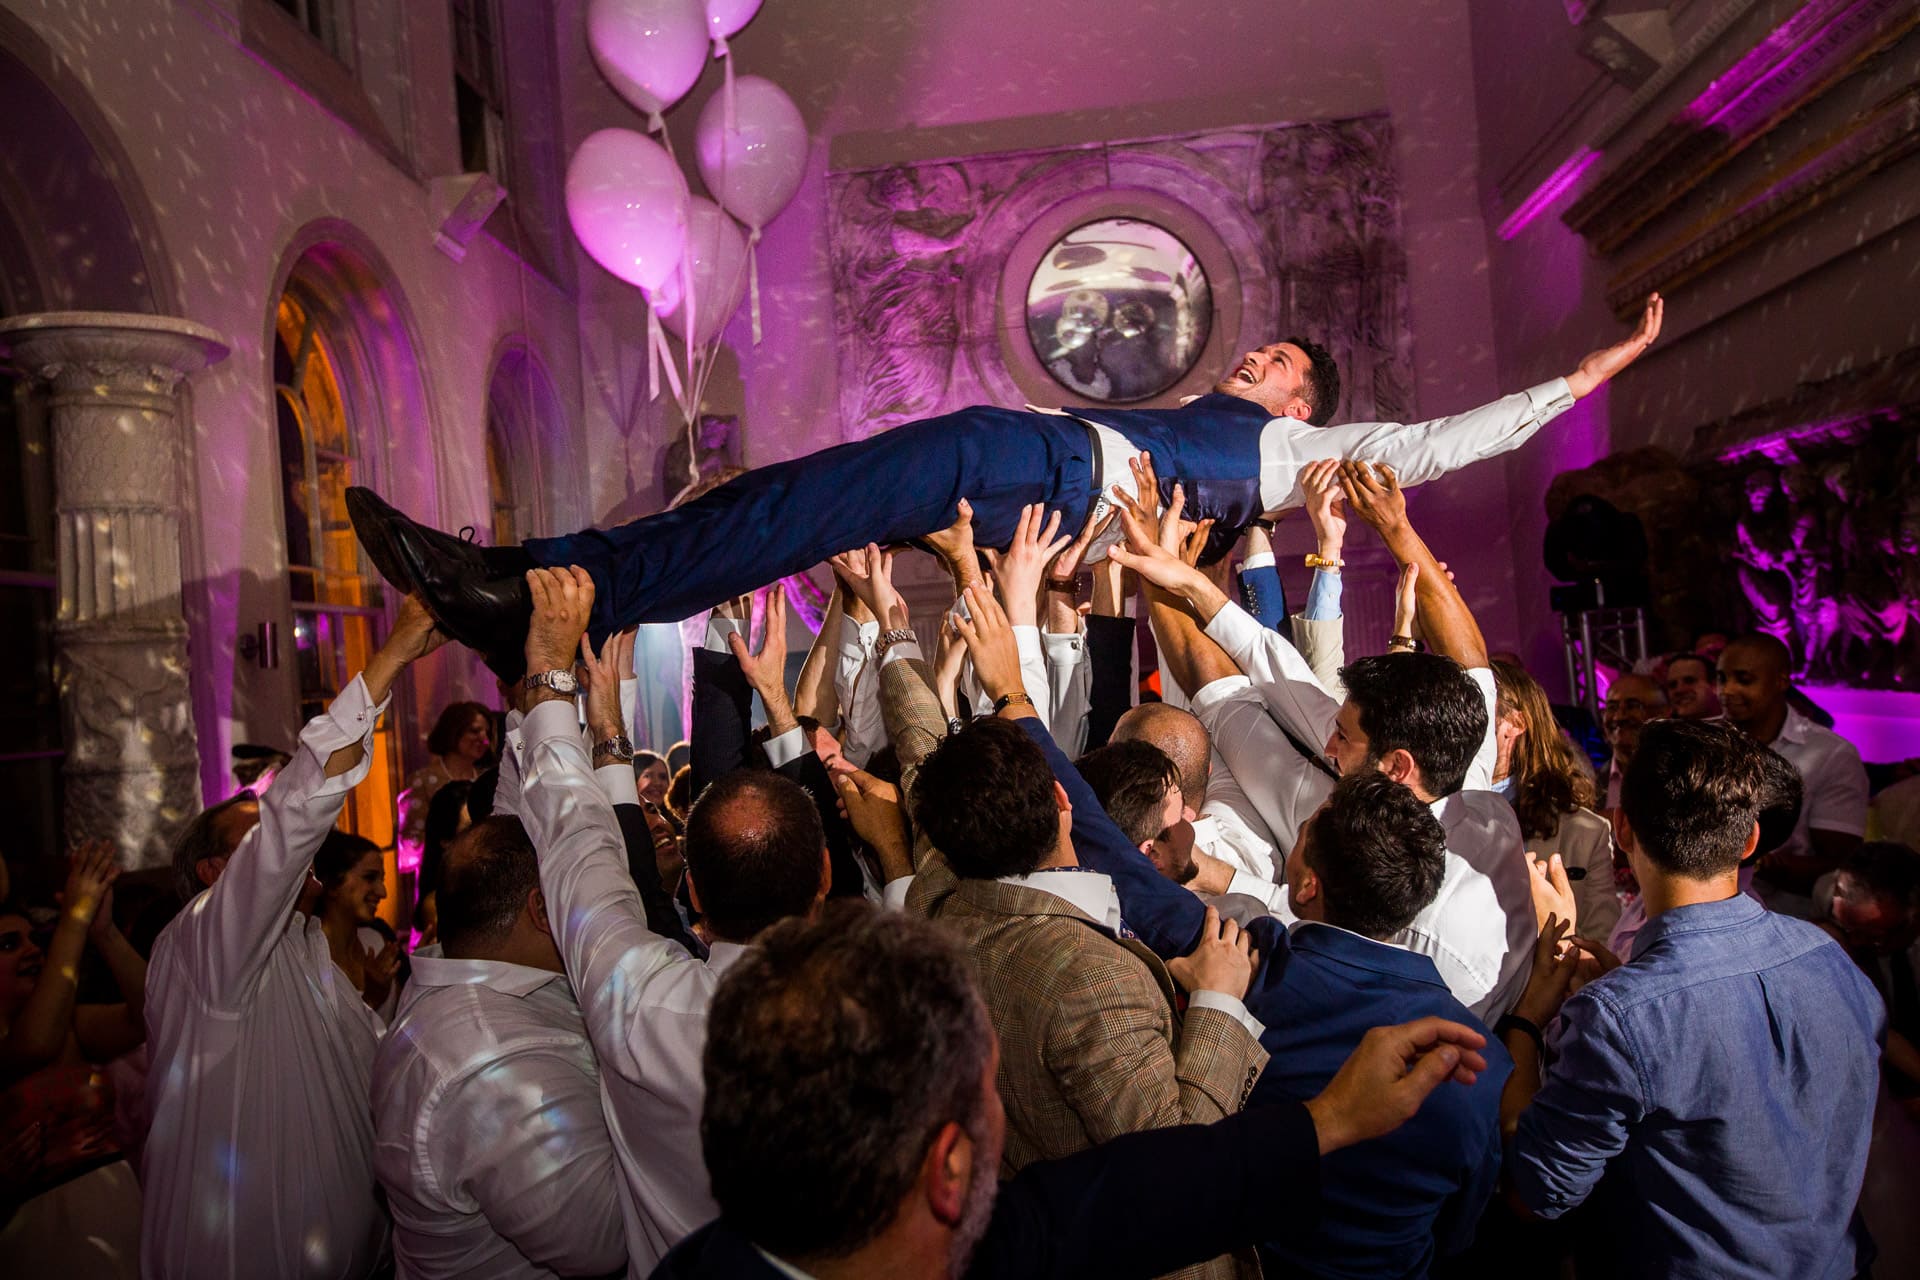 Greek groom lifted up on dance floor